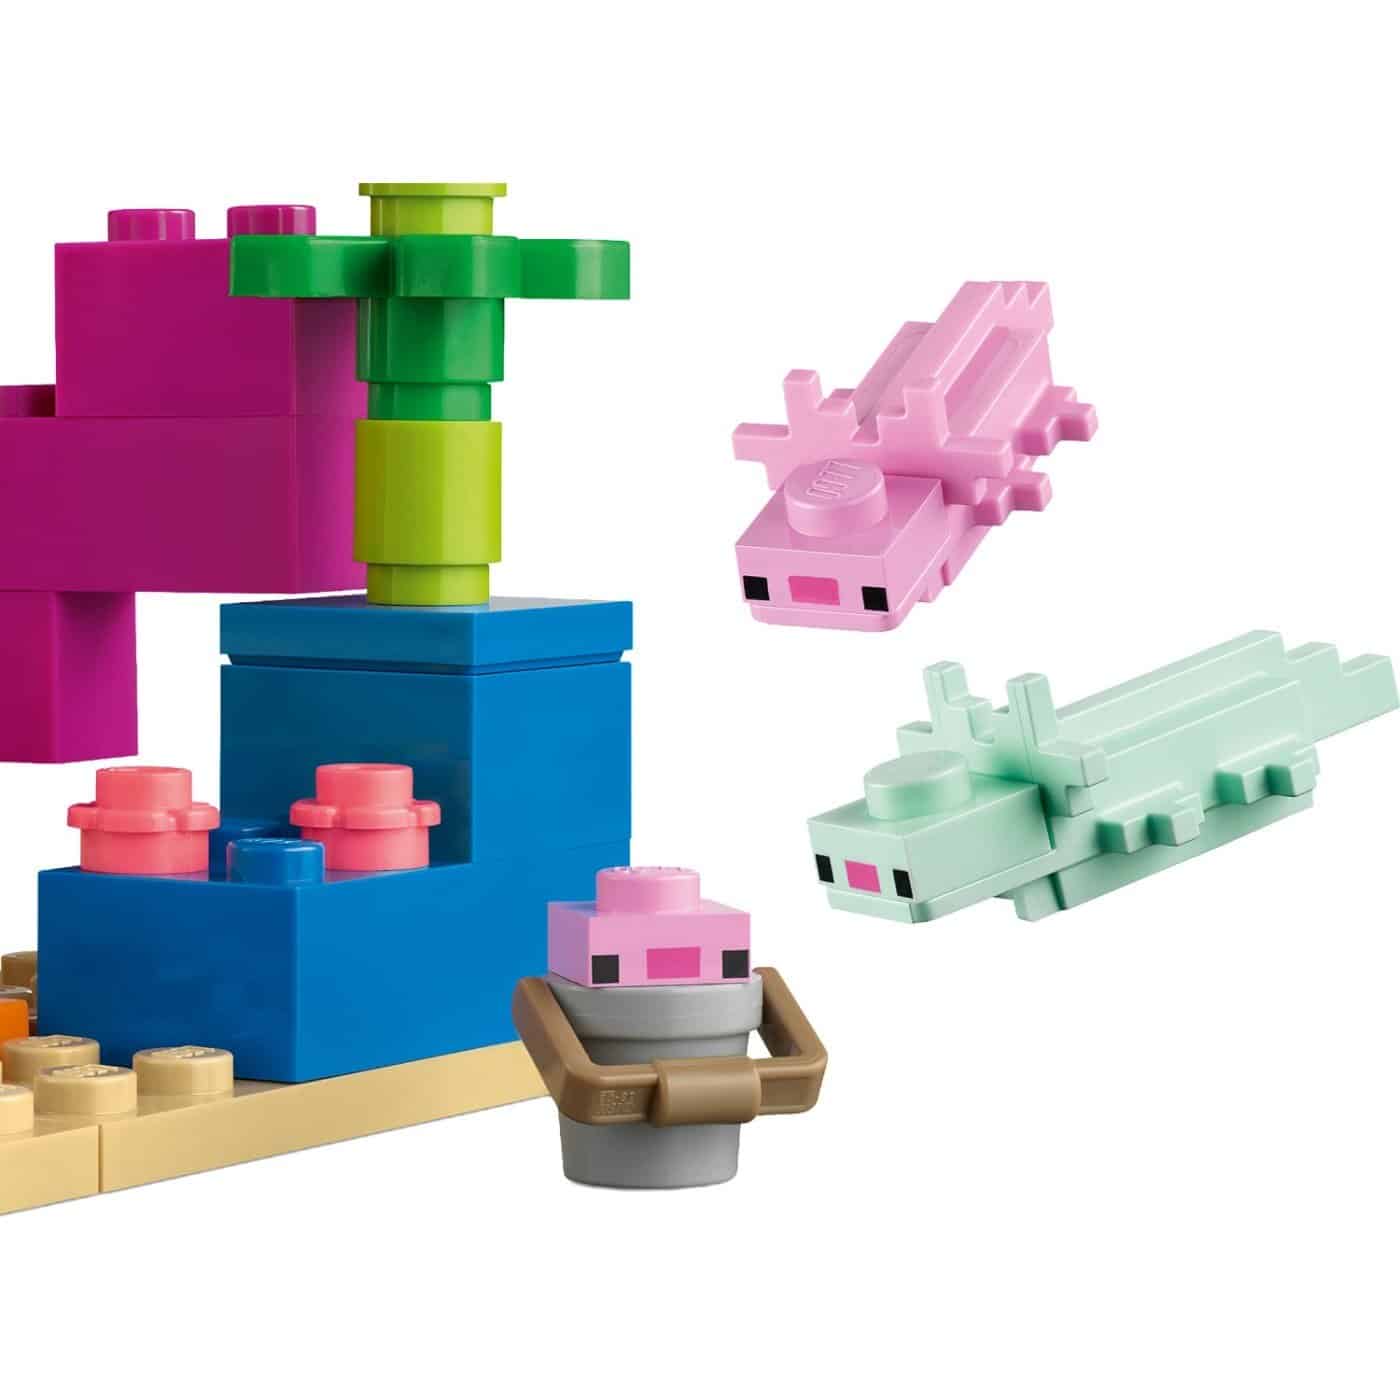 21247 Lego Minecraft The Axolotl House